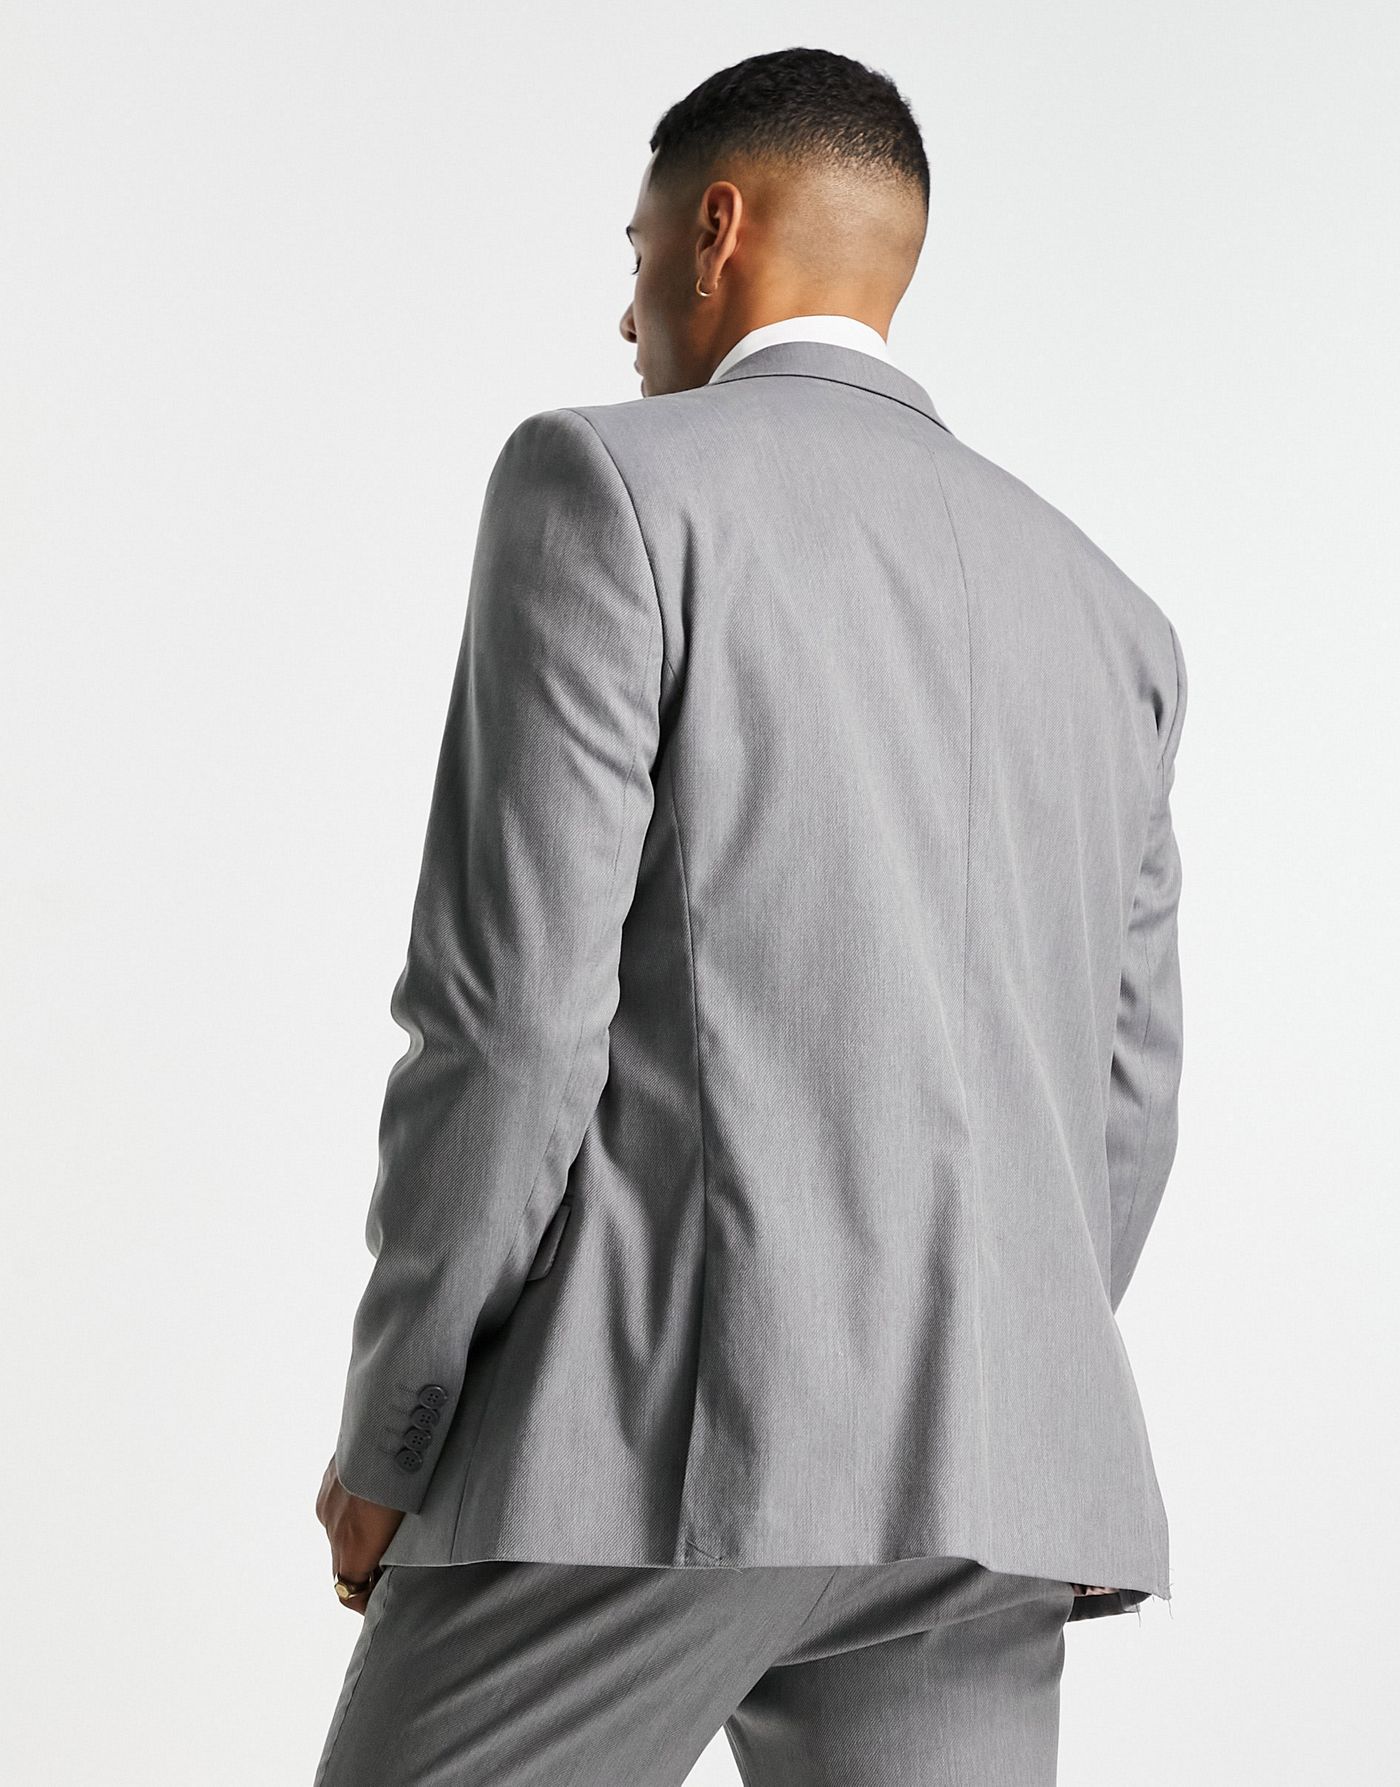 River Island skinny suit jacket in grey